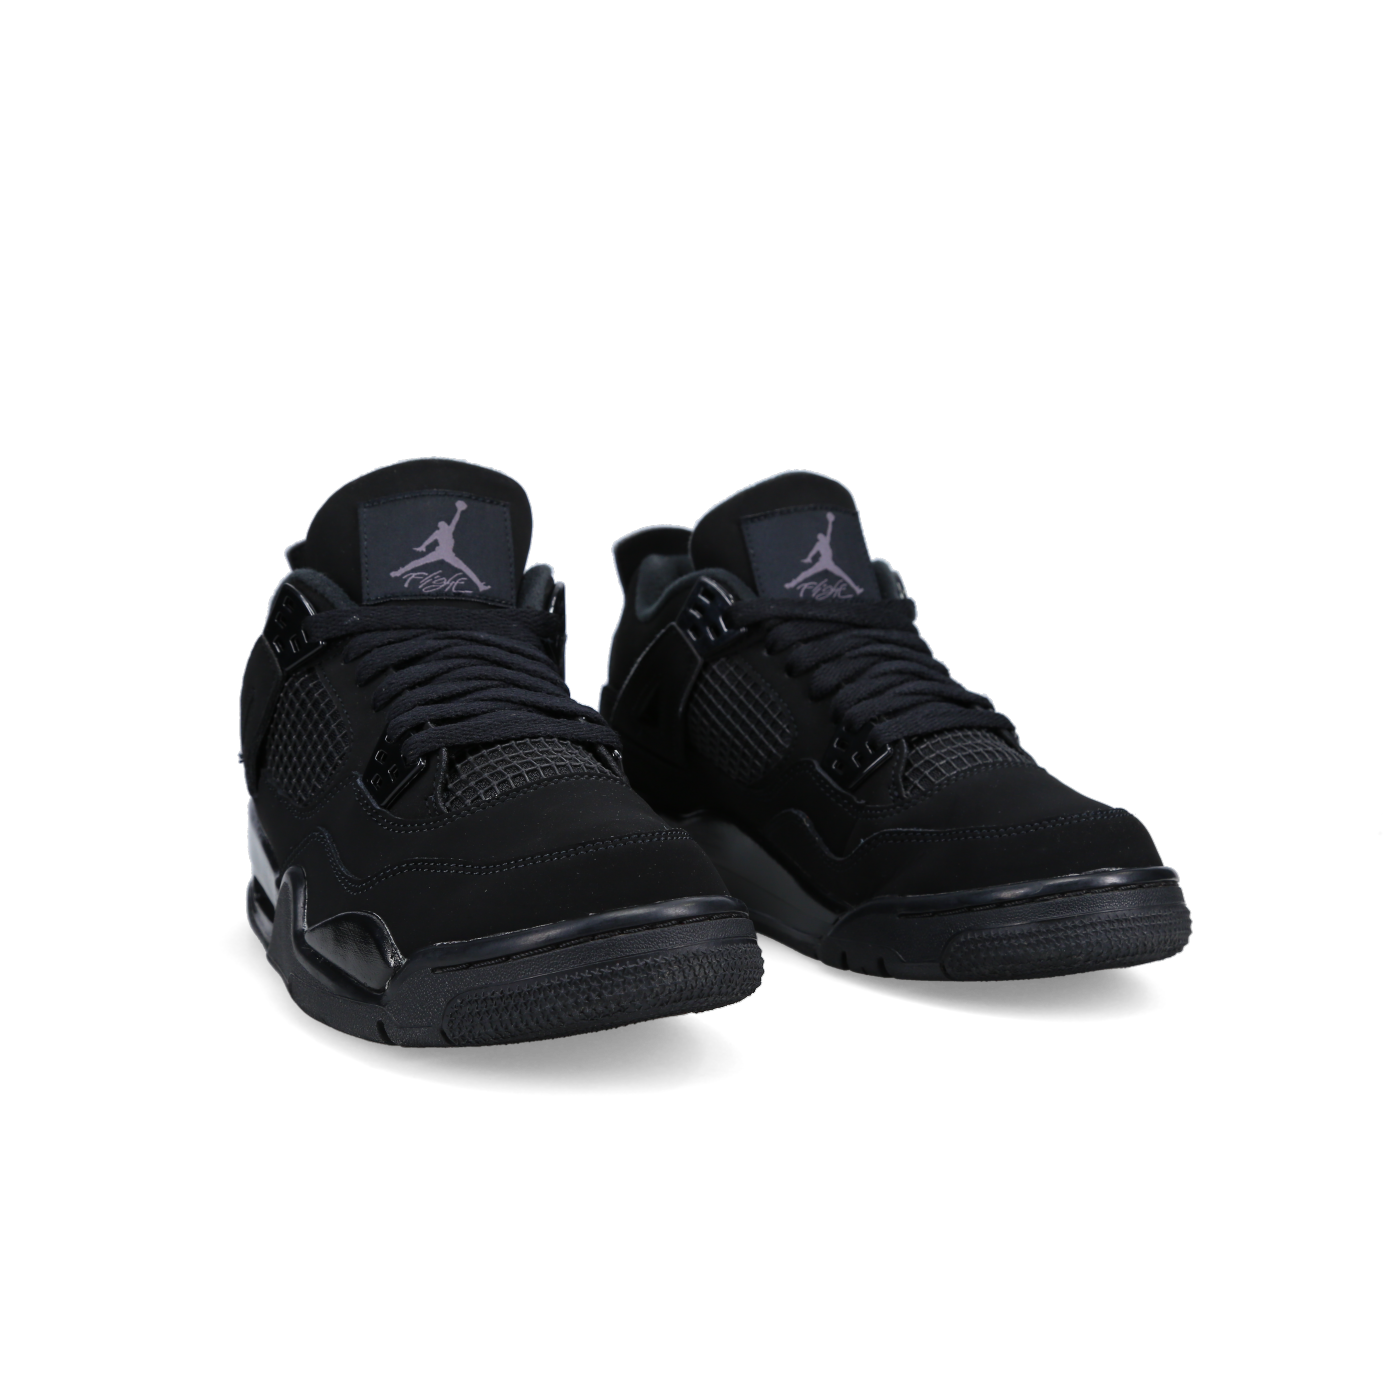 Jordan 4 Retro 'Black Cat' 2020 (GS) - Side View